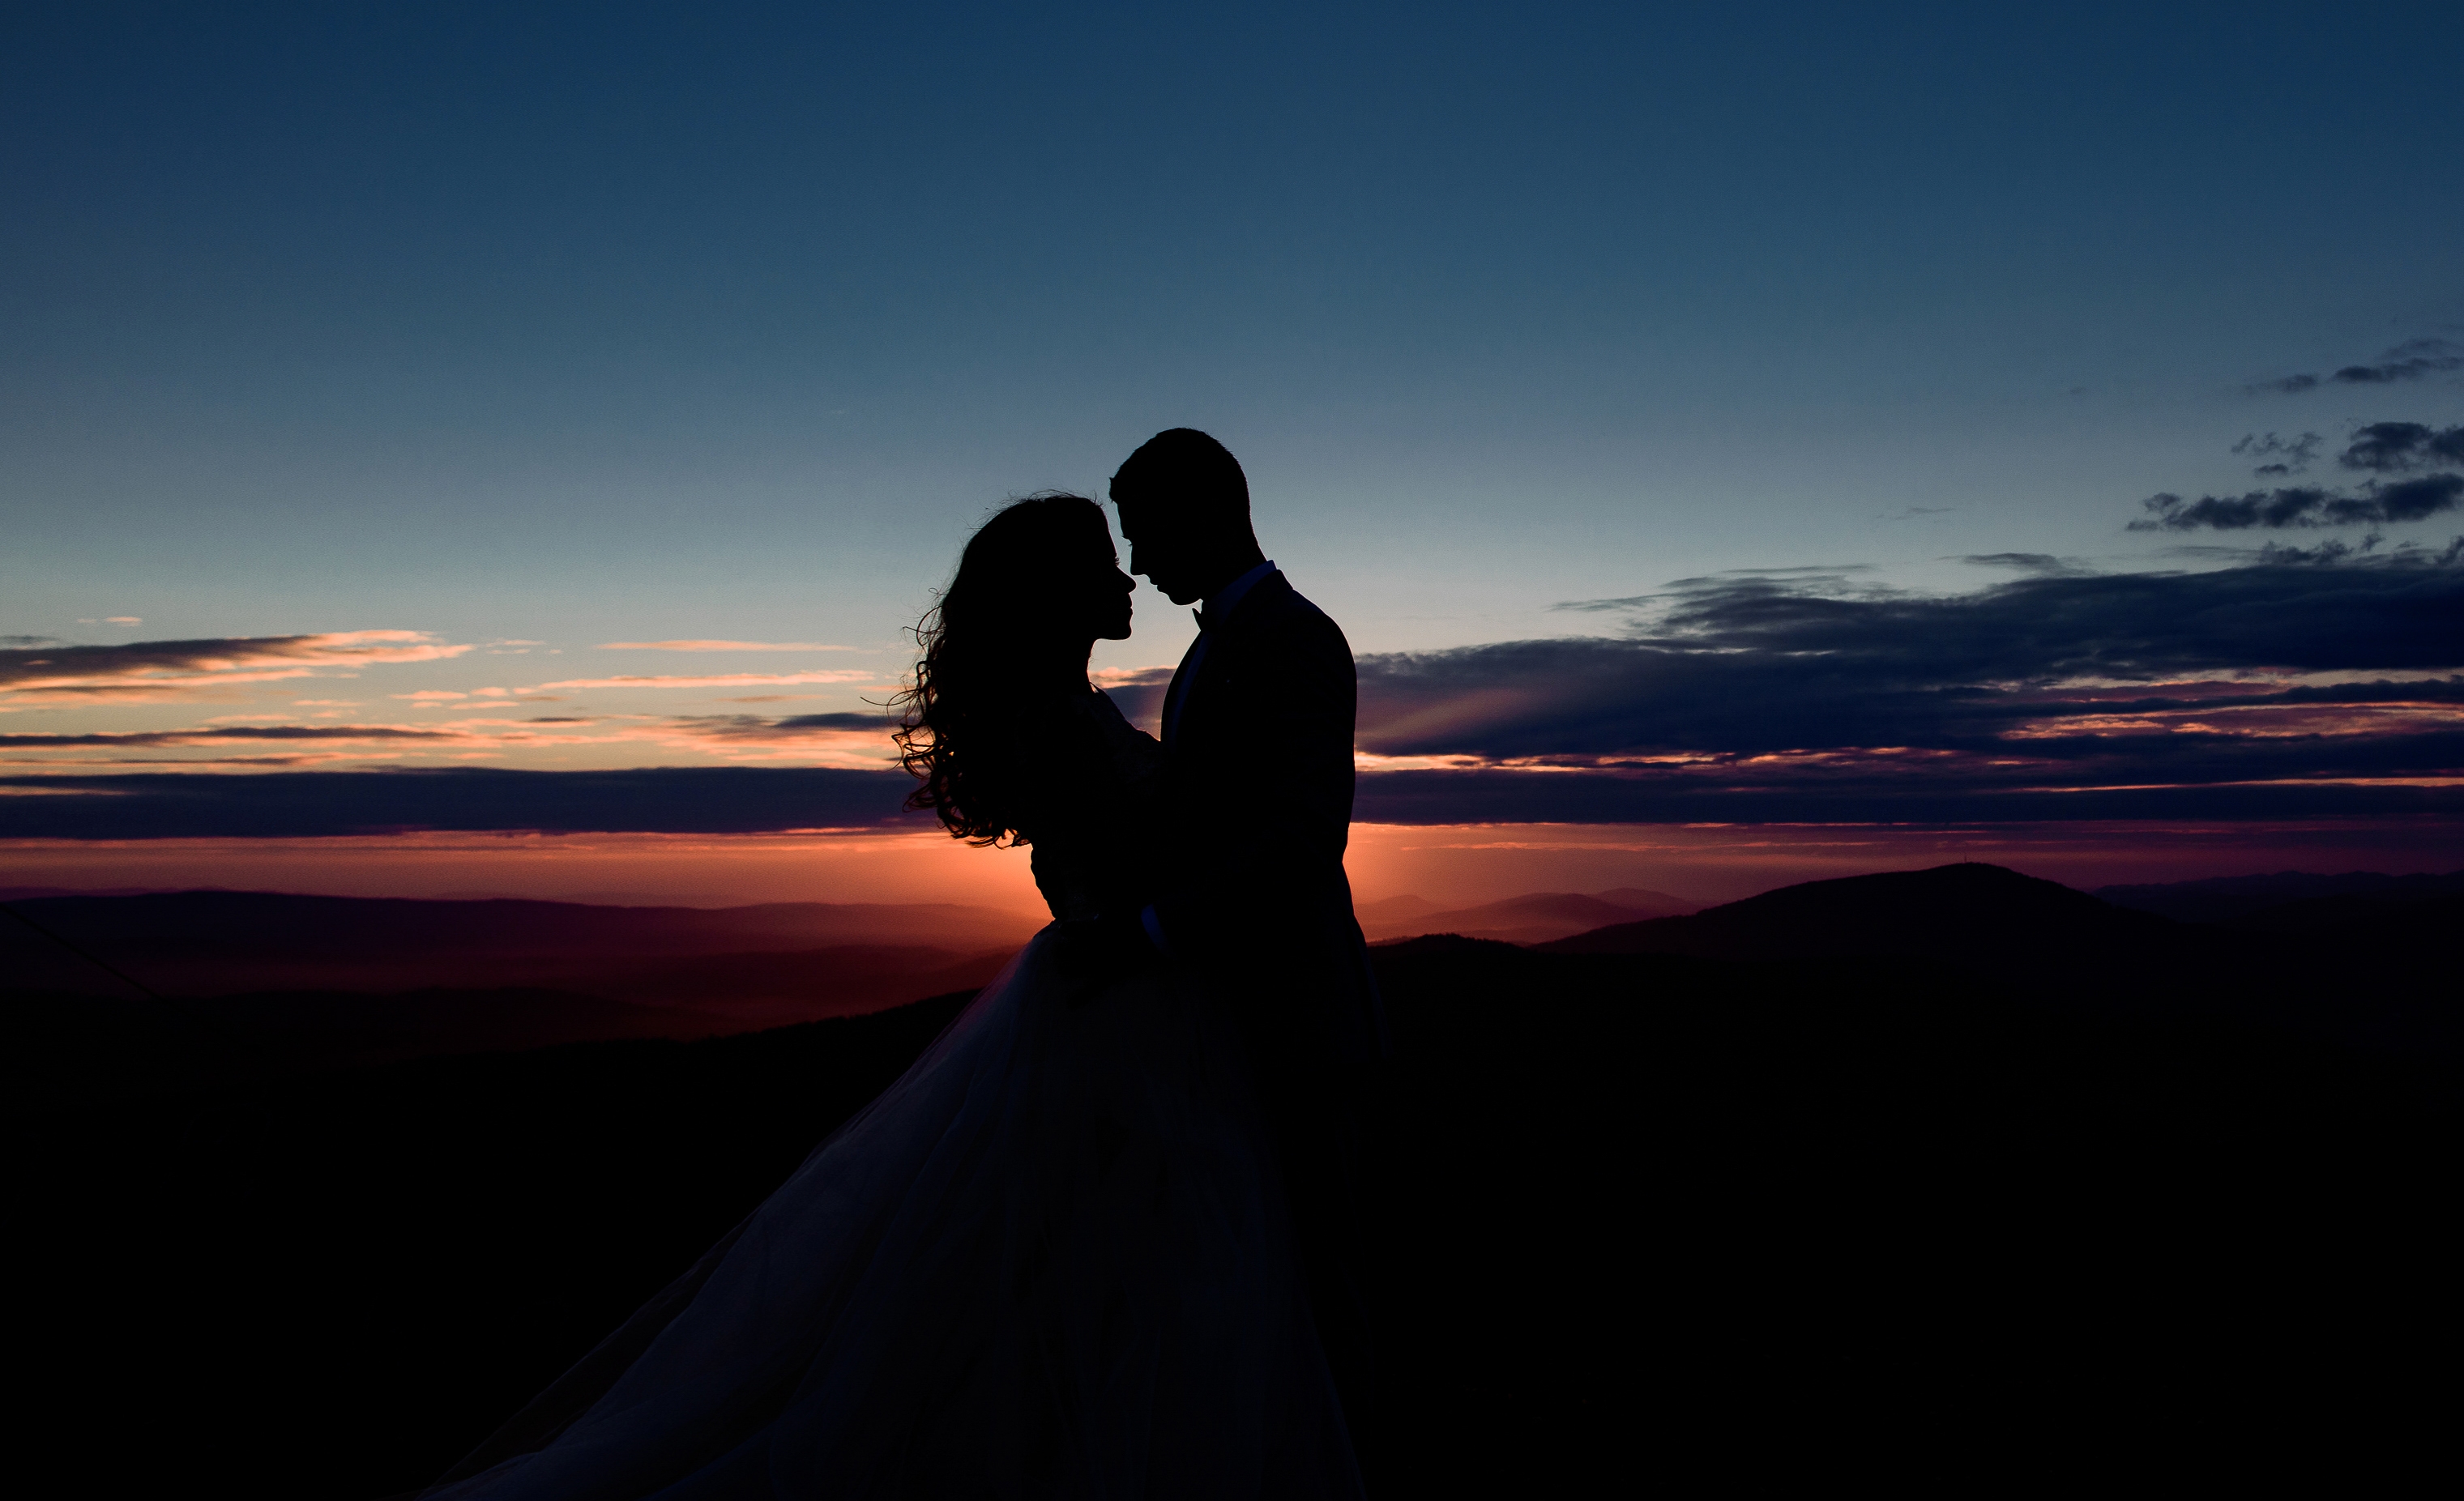 Фото бесплатно пара силуэт, невеста и жених, закат